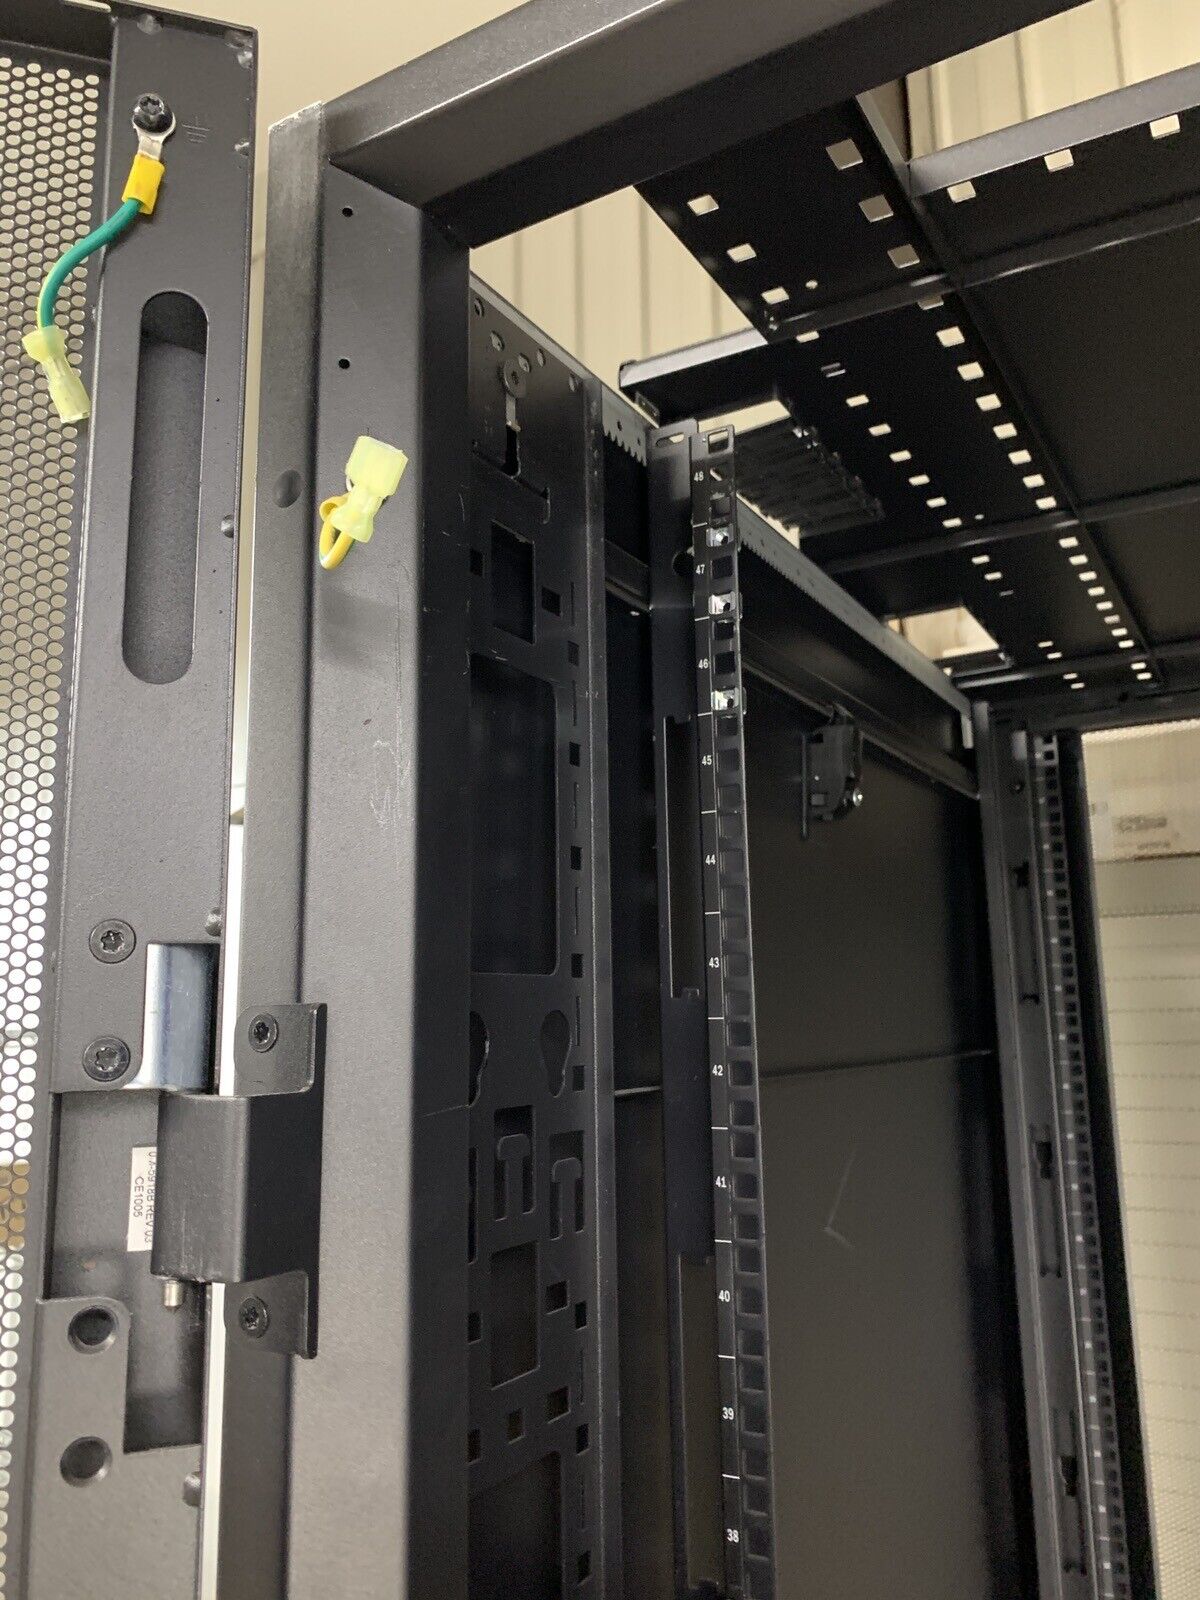 APC AR3107 NetShelter SX Enclosure 48U Server Rack Cabinet Missing a Side Panel